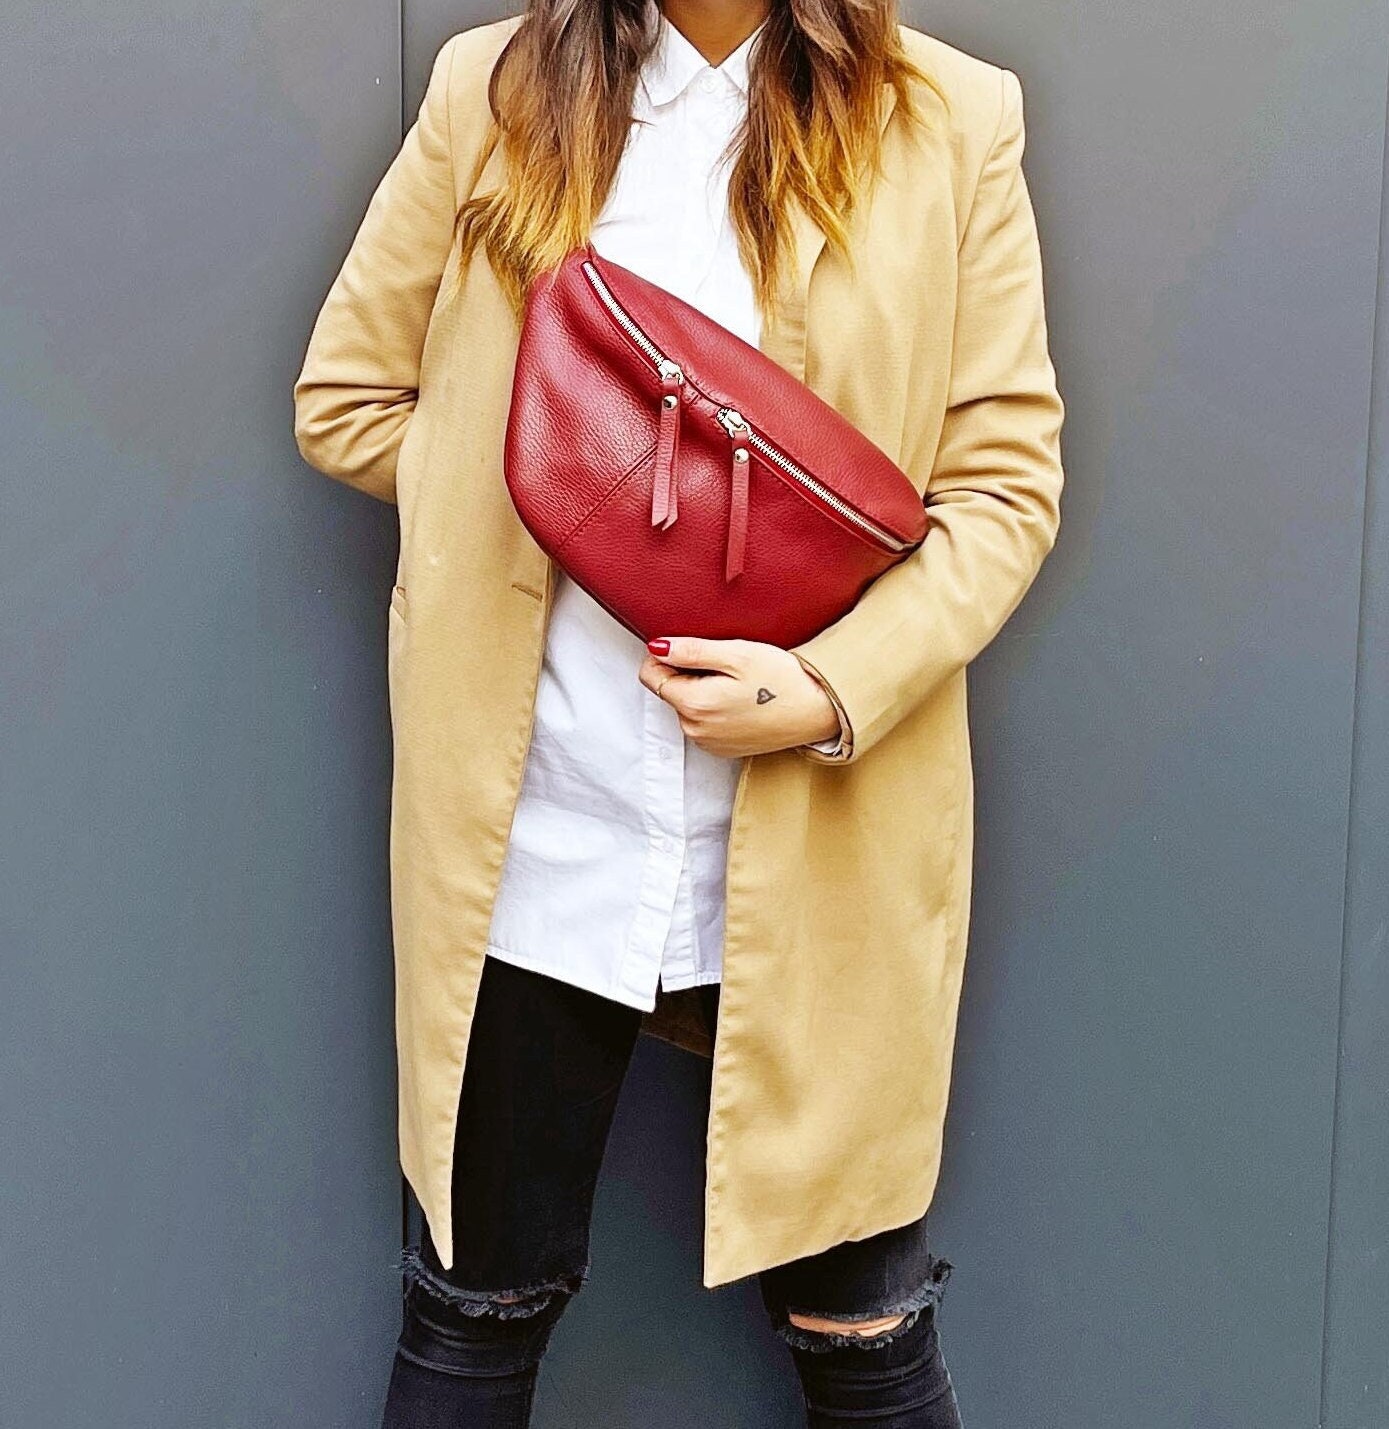 Hermès Red Leather Travel Clutch Fanny Pack Waist Belt Bag - Chelsea  Vintage Couture